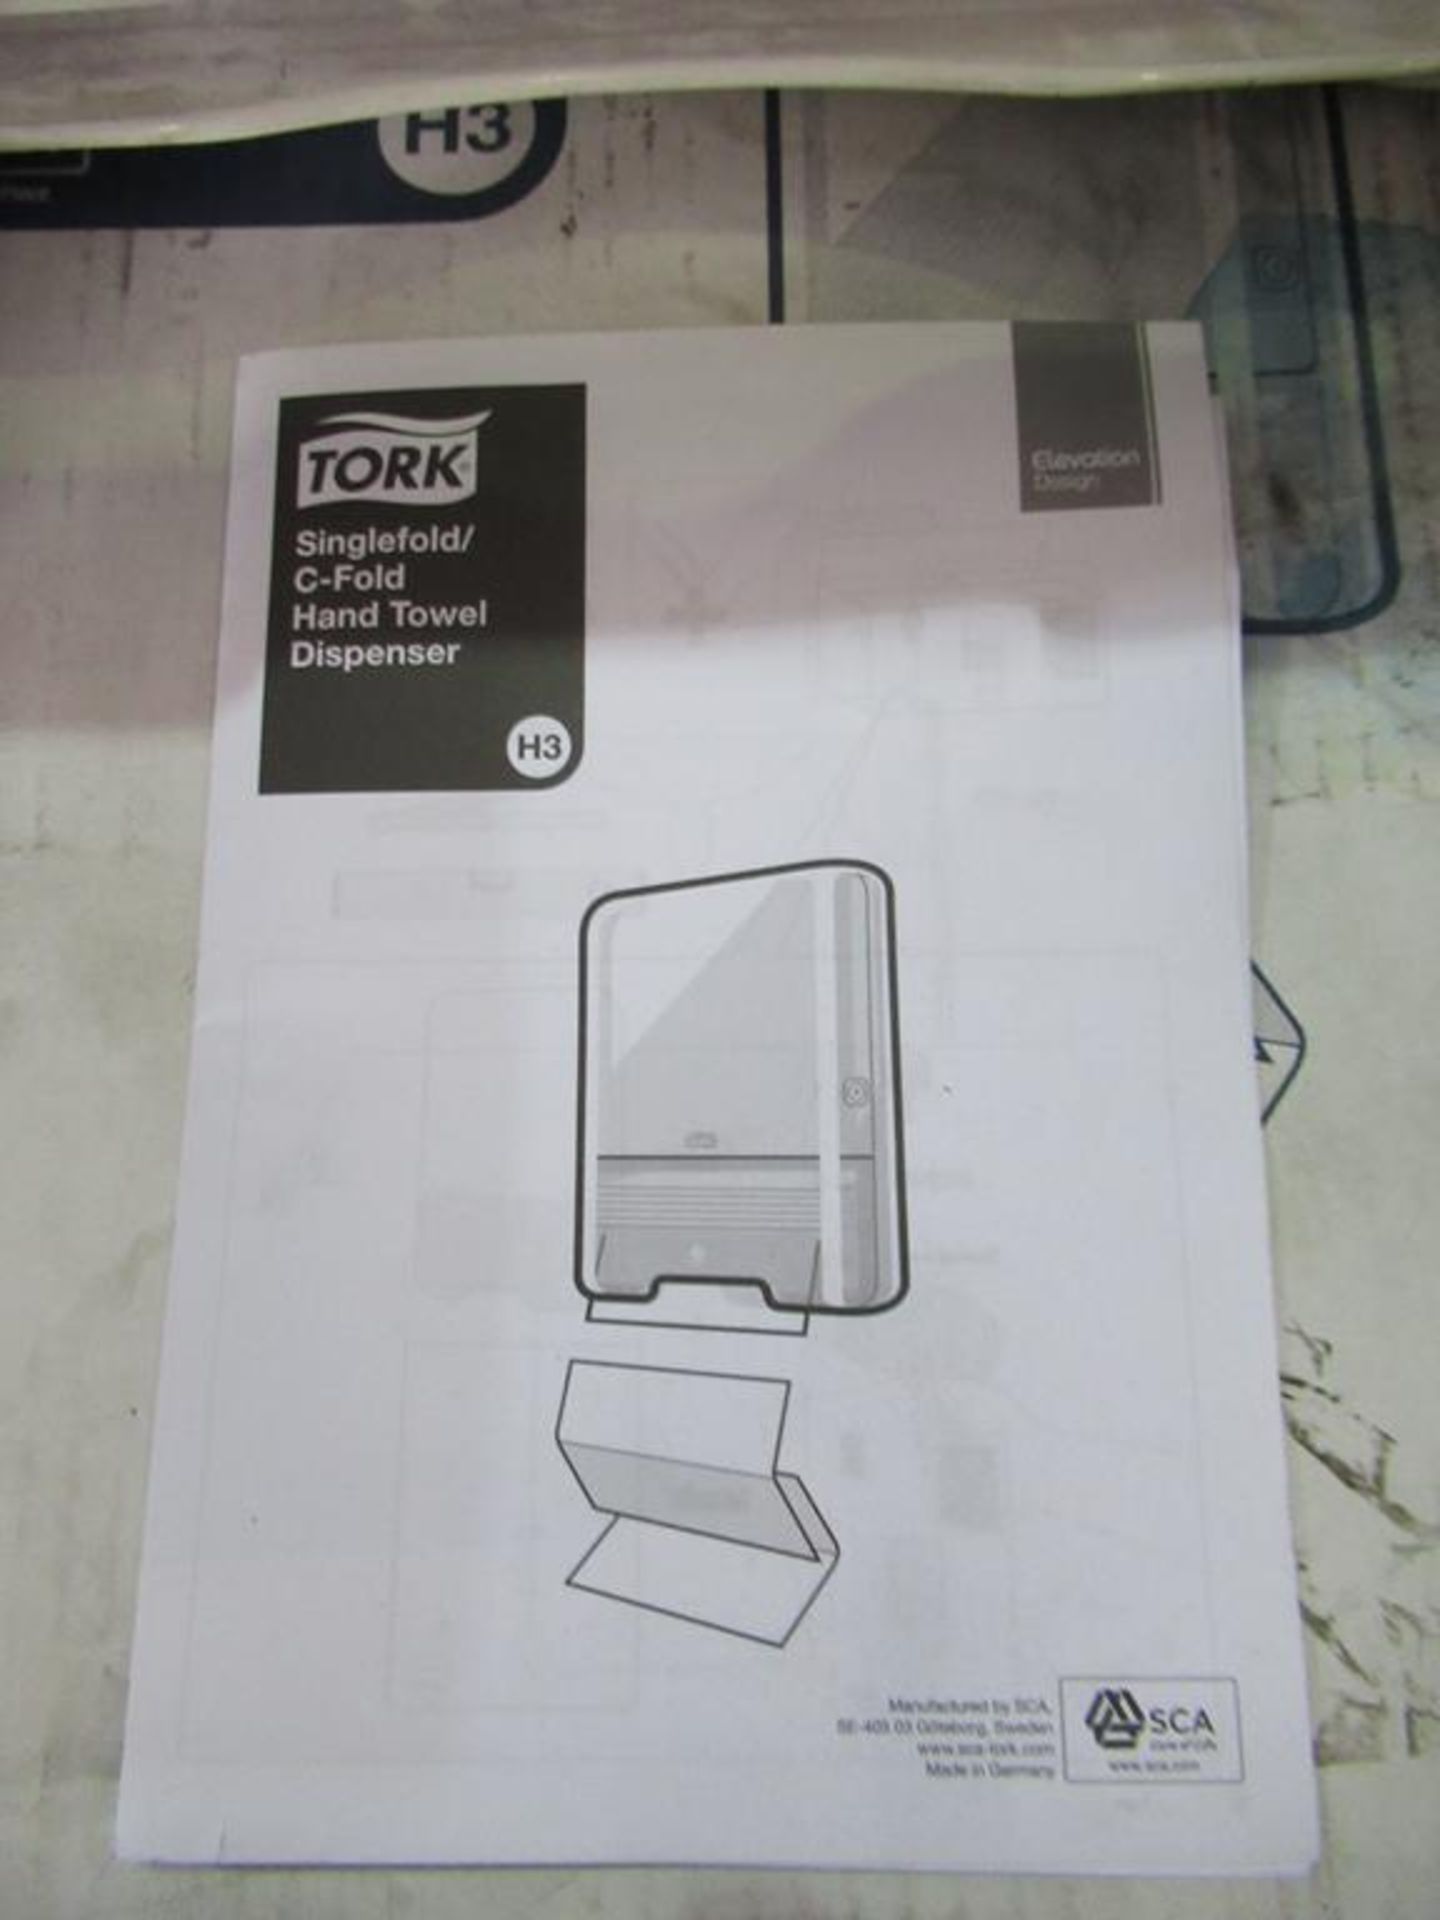 56 x Tork H3 New Single Fold Hand Towel Dispenser - Image 3 of 6